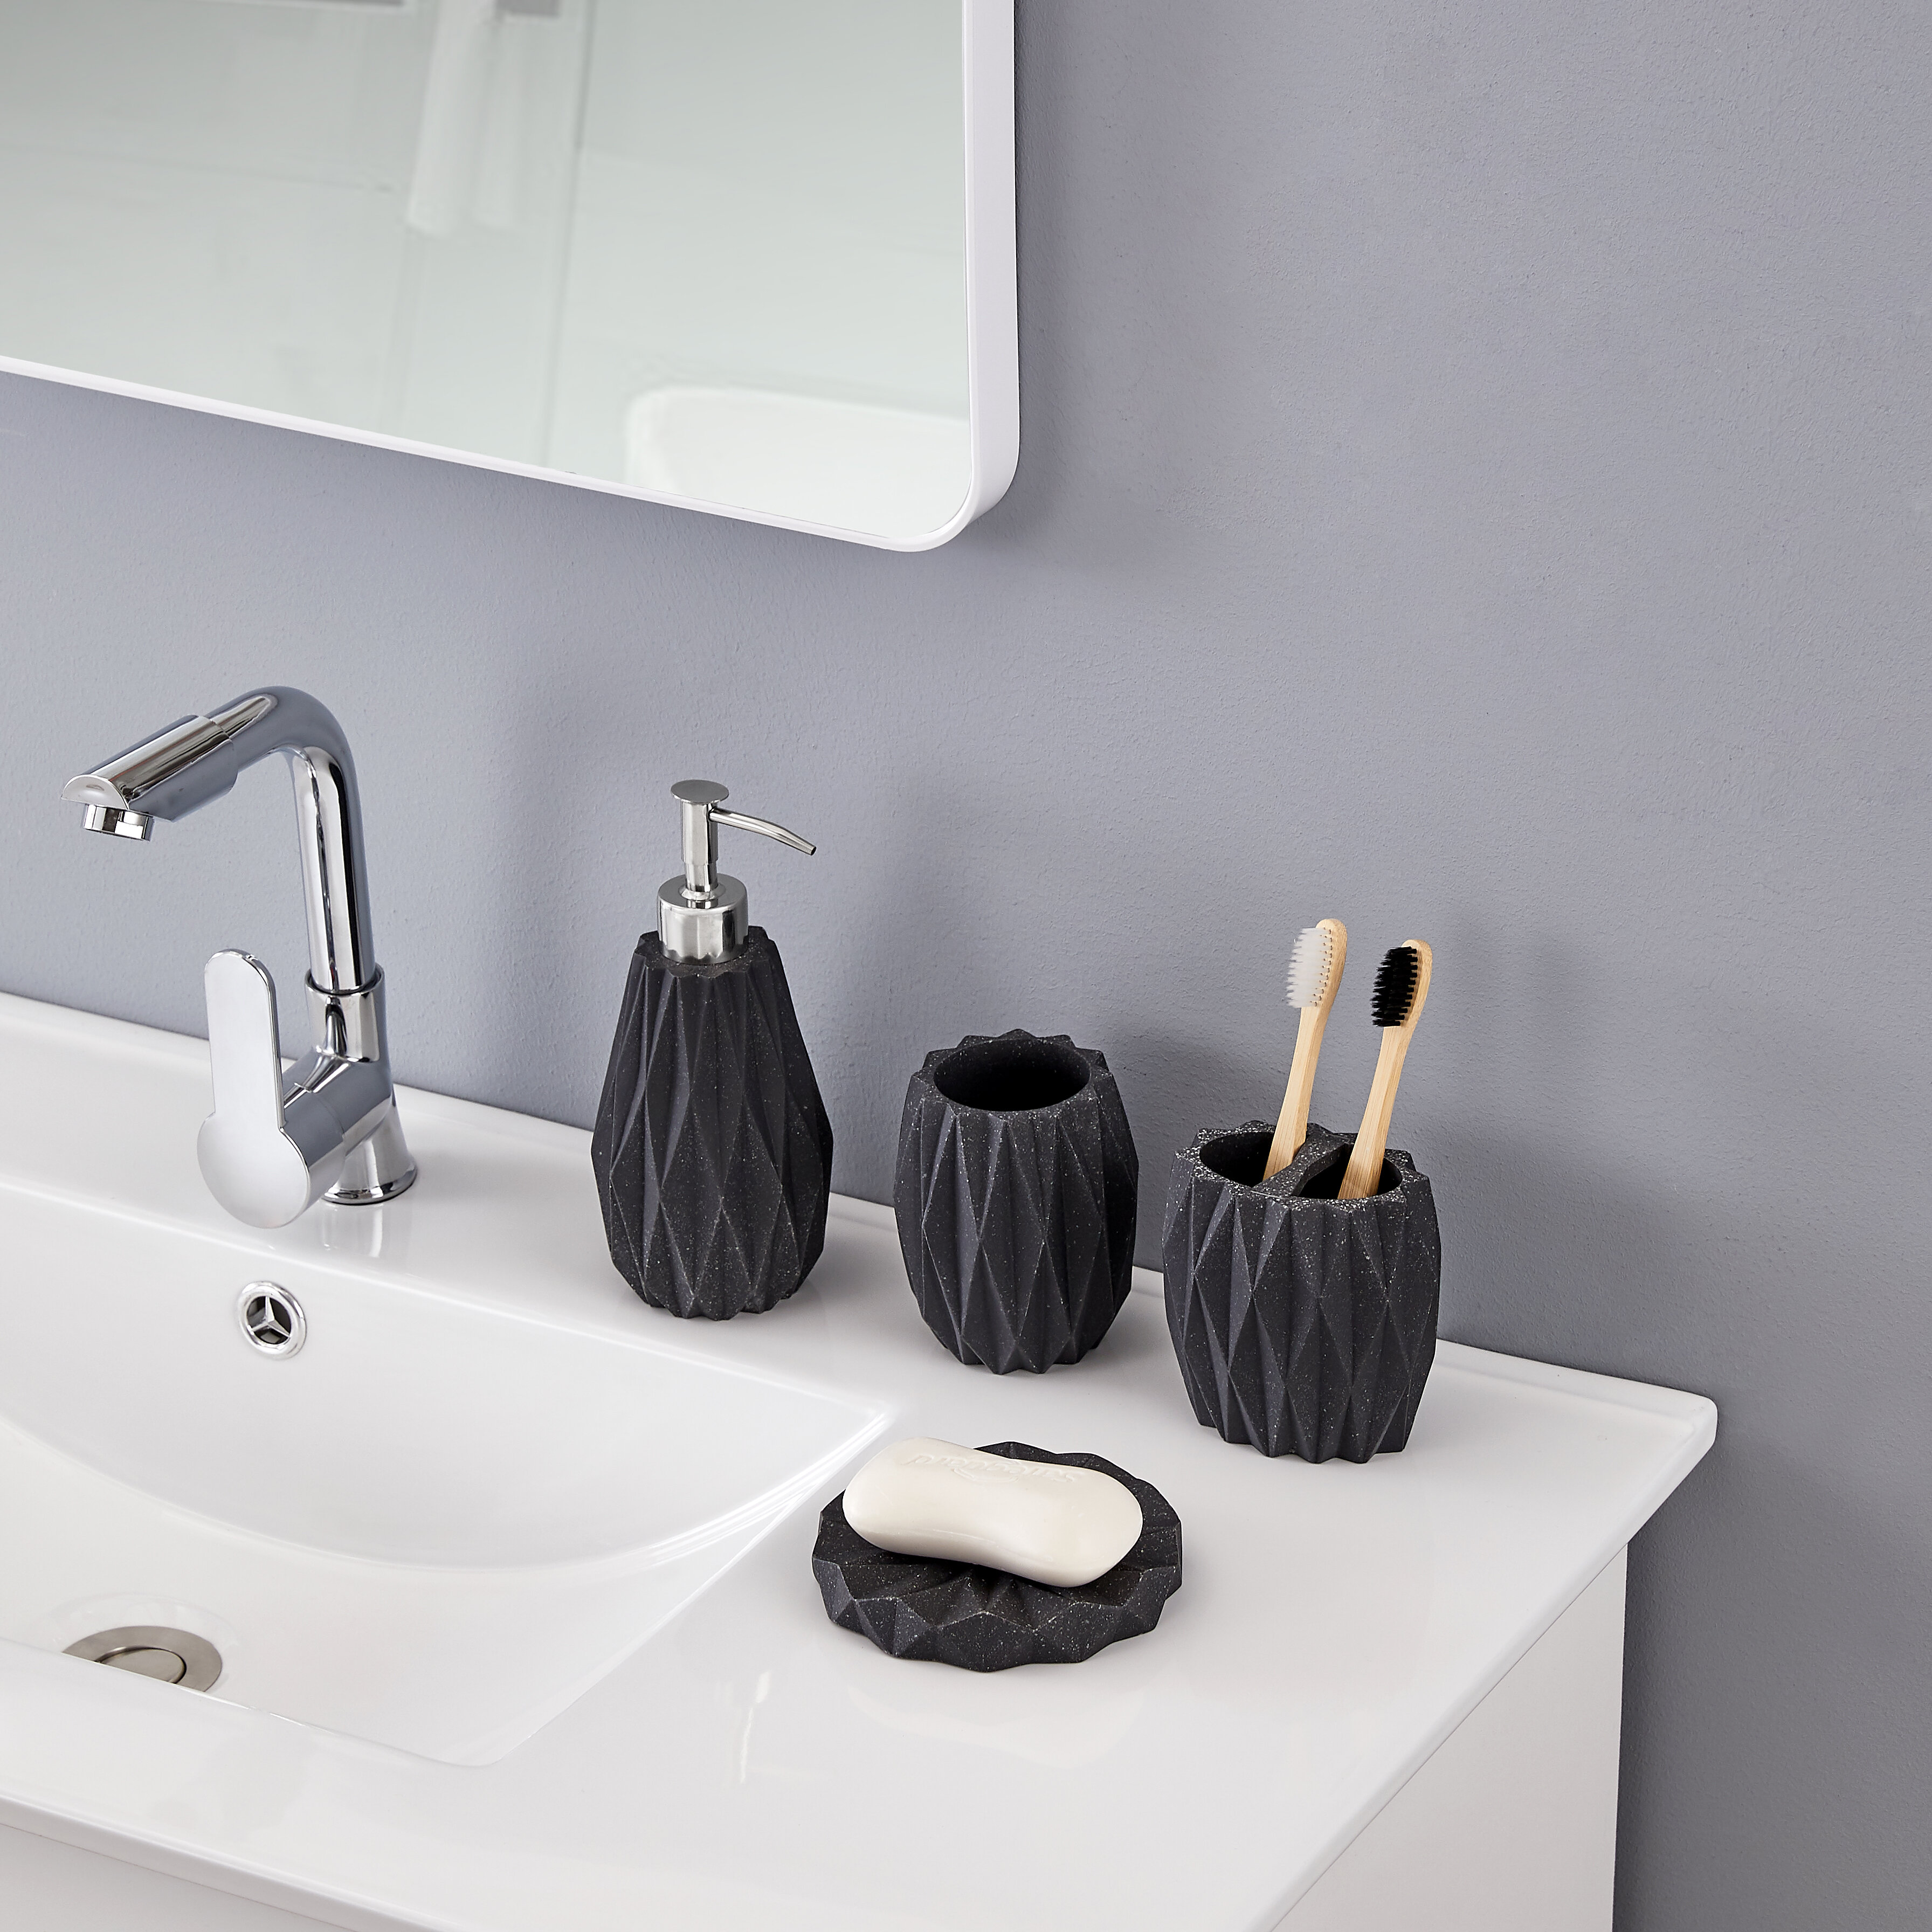 InterDesign Nogu Bath Toothbrush Holder Stand for Bathroom Vanity Countertops 